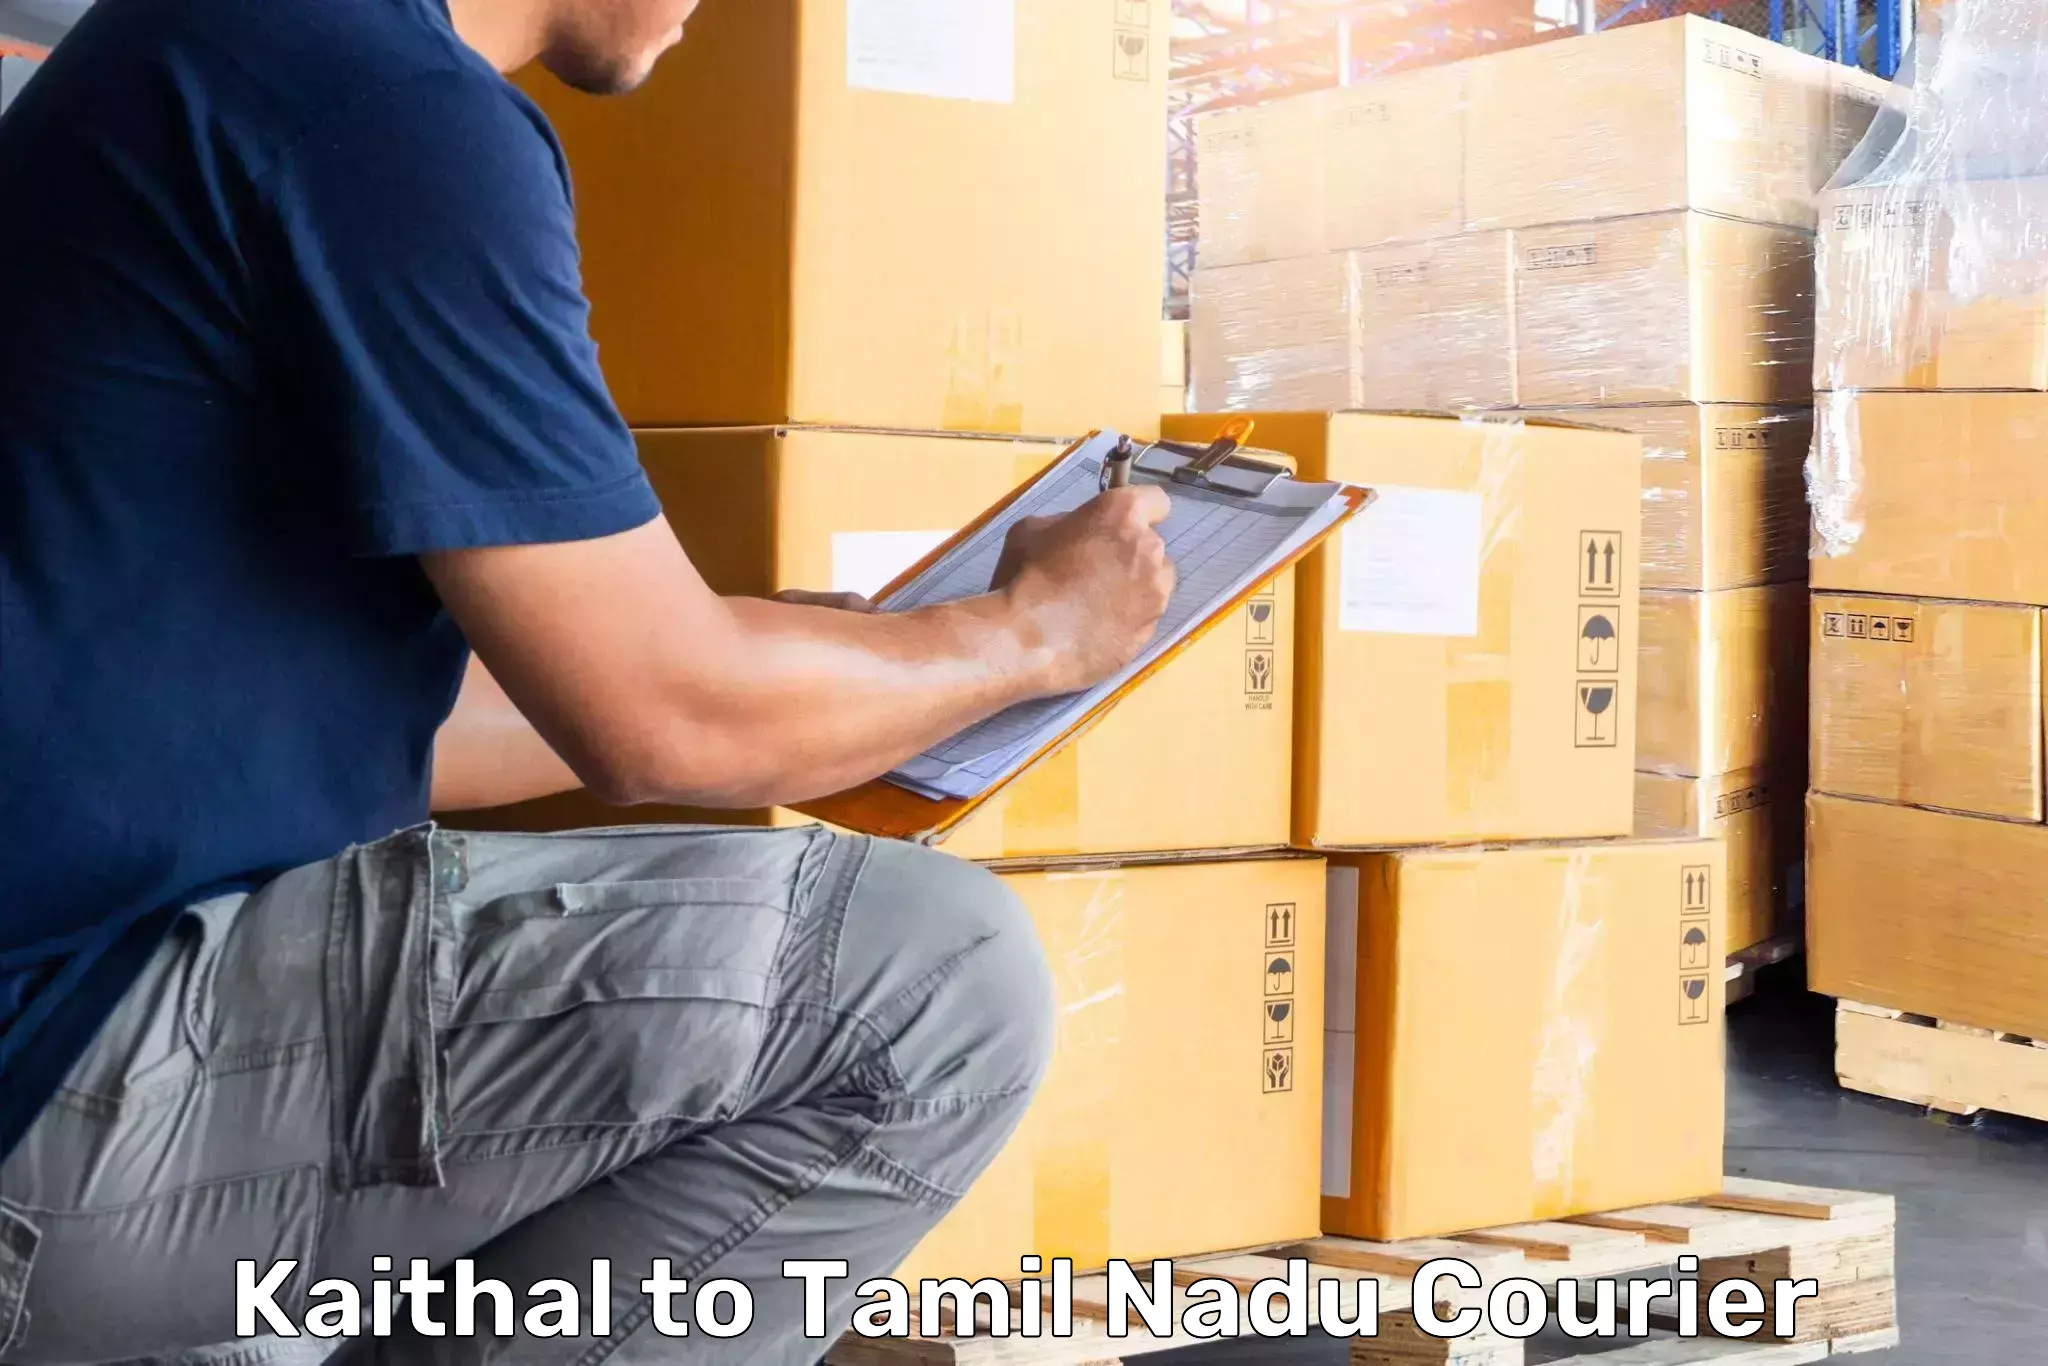 Luggage shipment specialists Kaithal to Tiruvarur